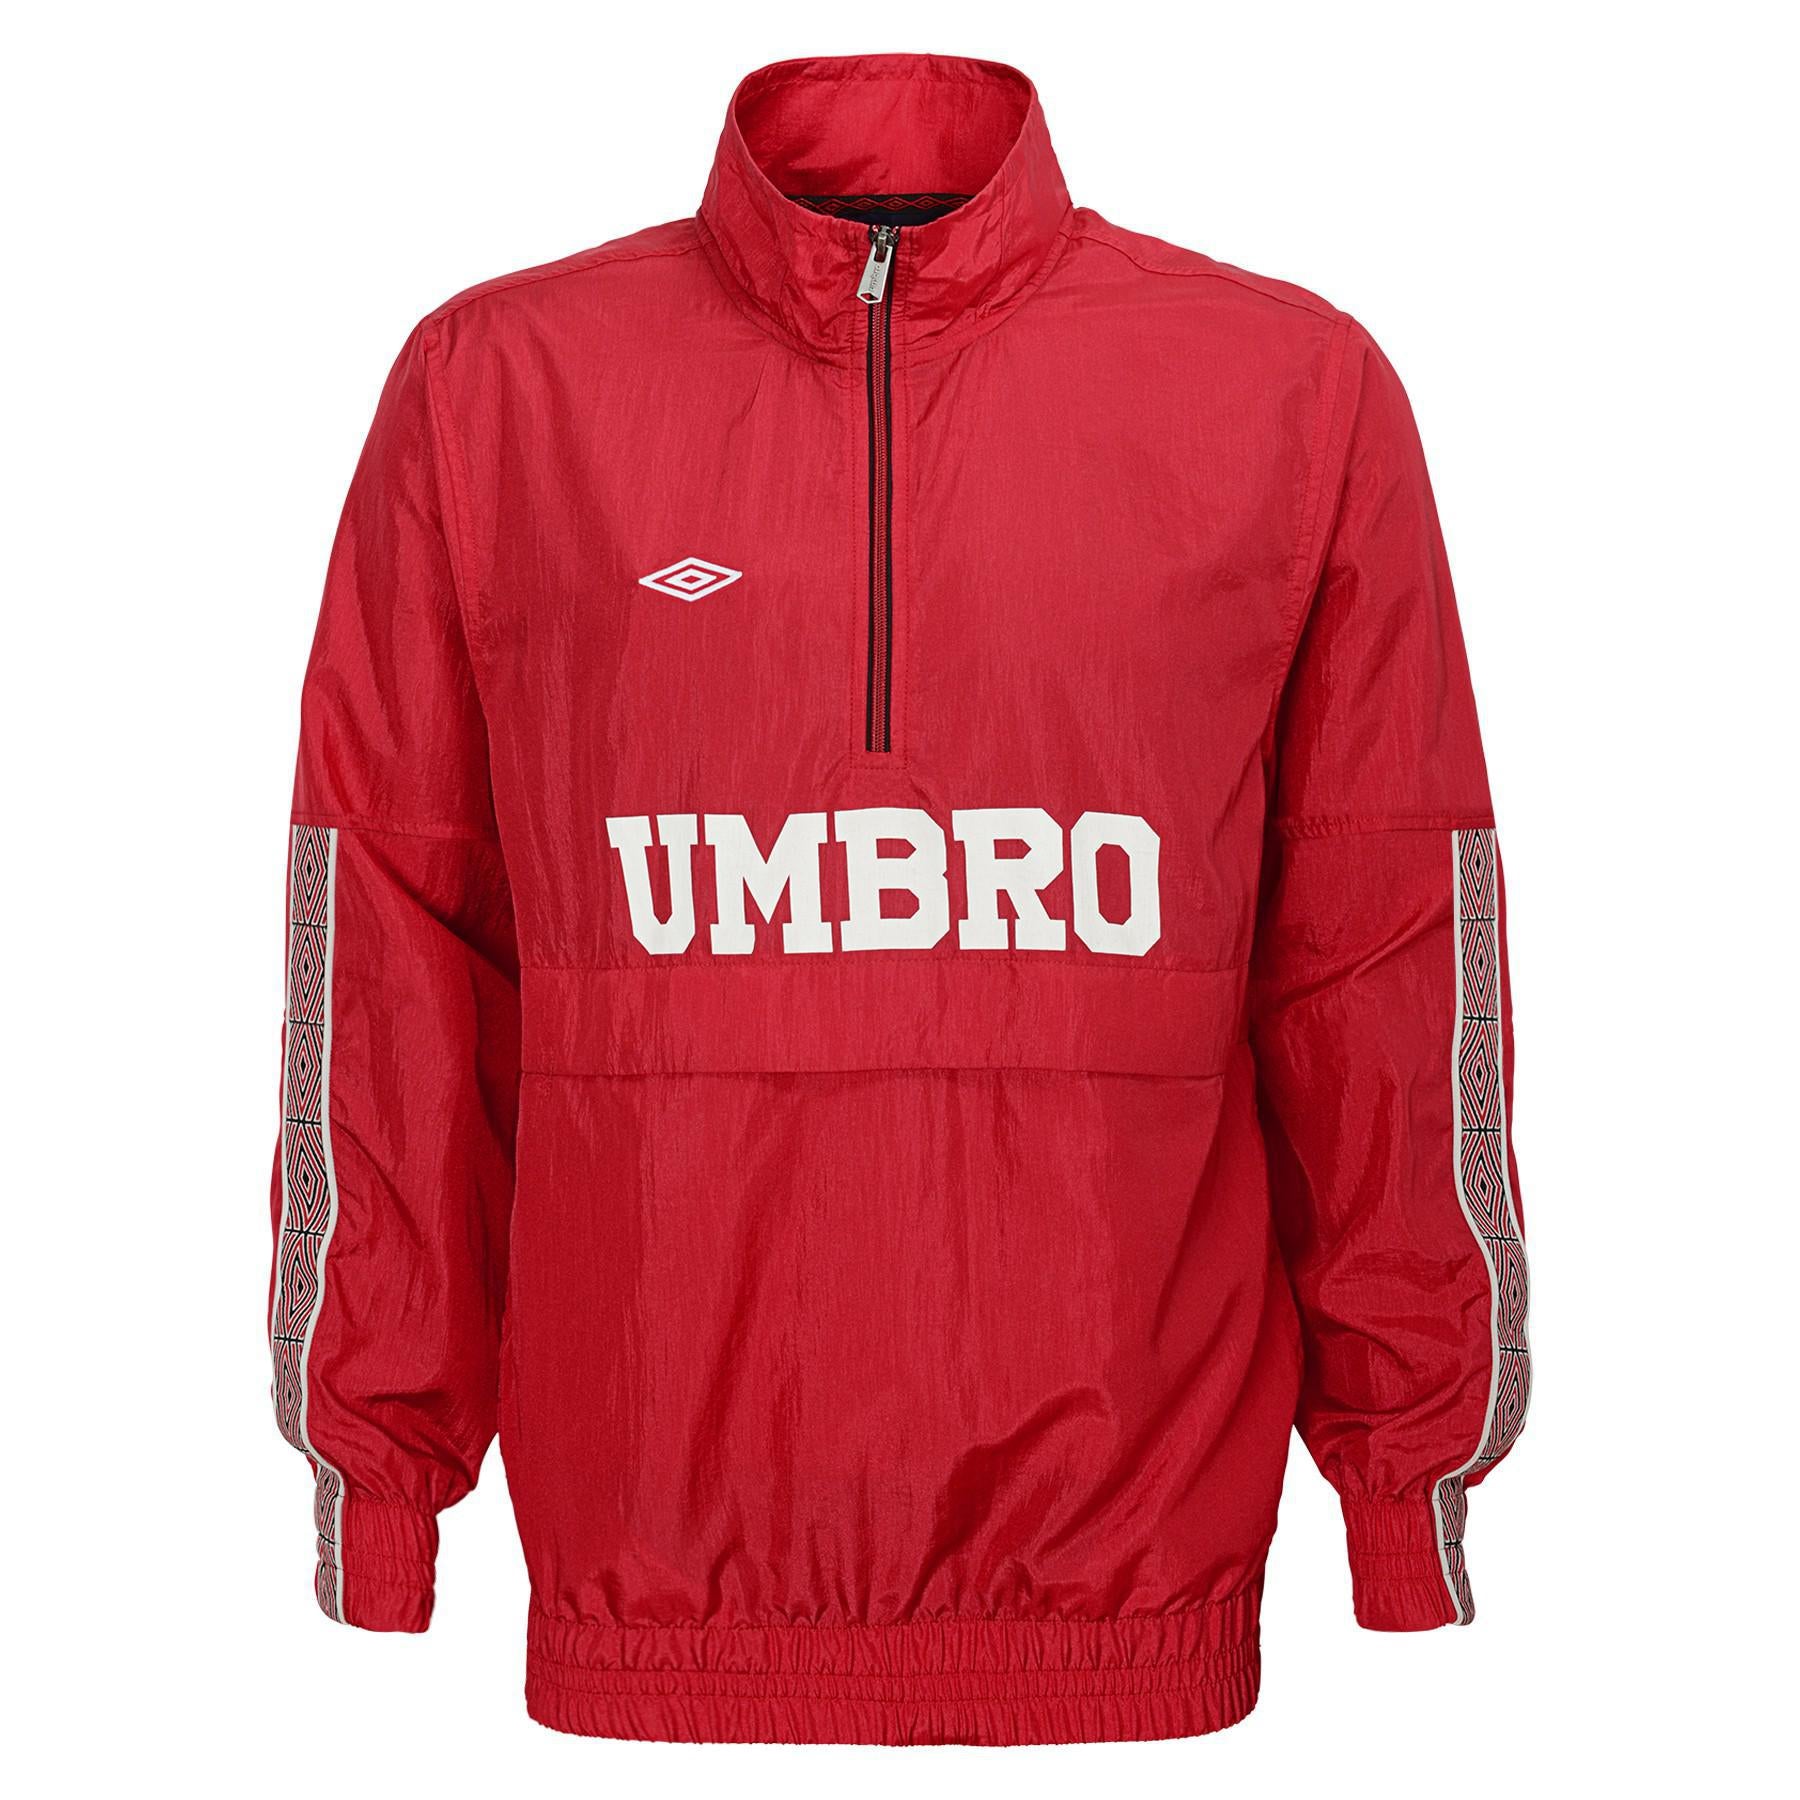 Umbro Men's in Goal Pullover Jacket, Color Options -